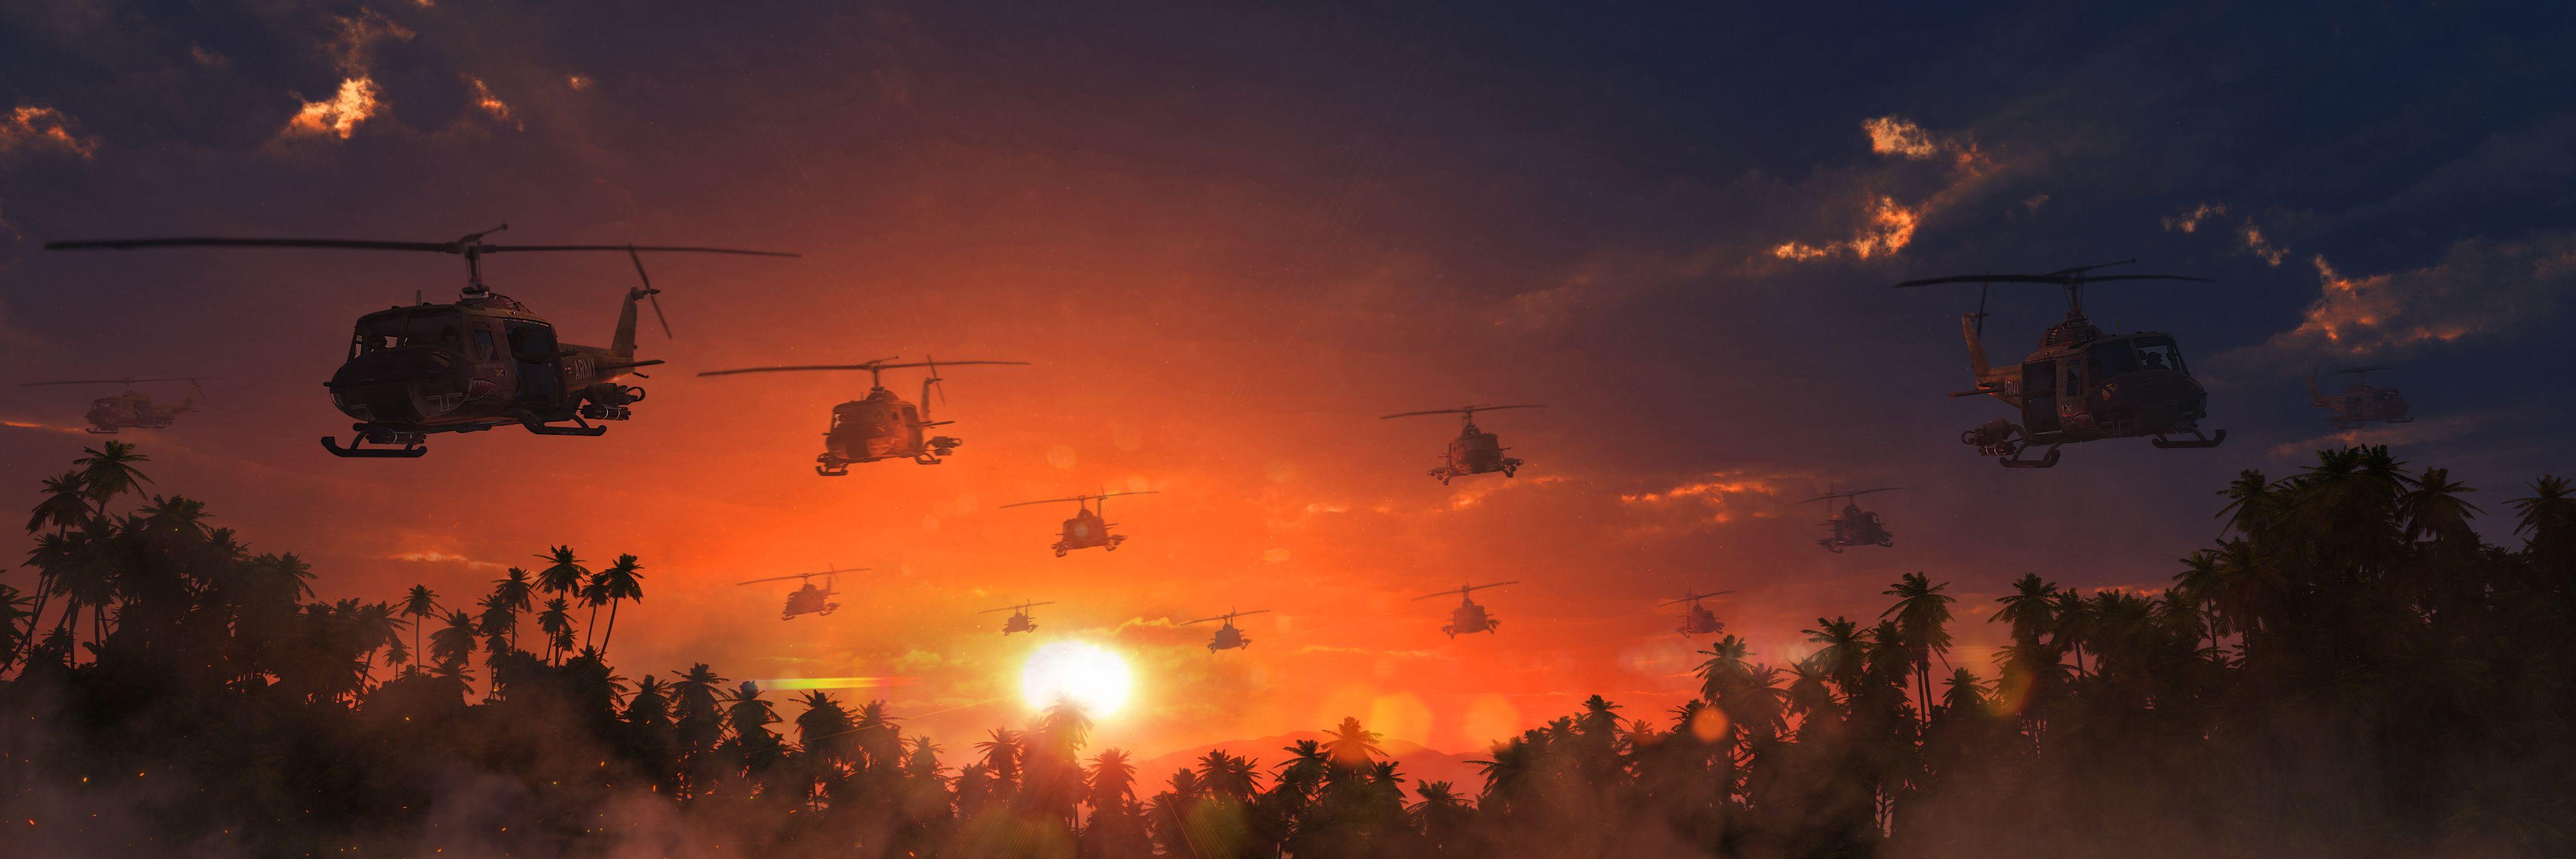 Wallpaper Helicopters The Vietnam war Sun Sky Sunrises 4320x1440